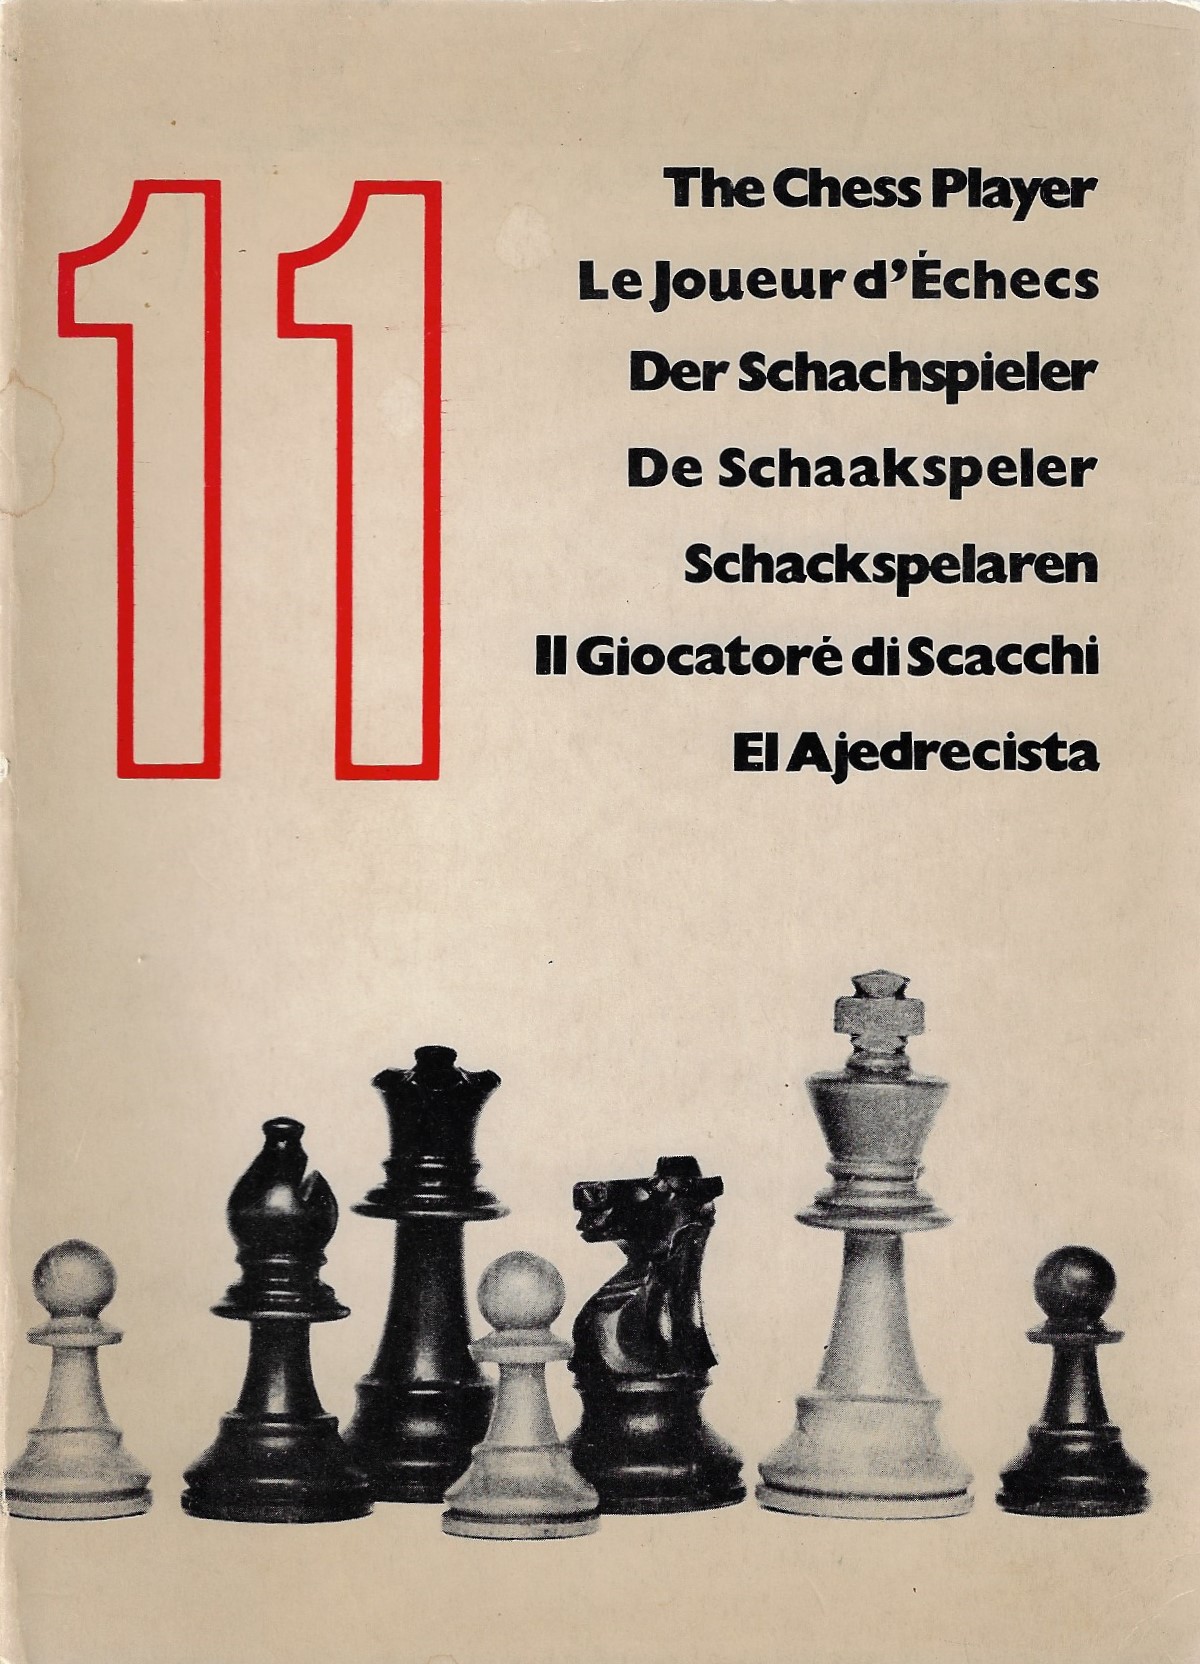  - The Chess Player - Le Joueur d'checs - Der Schachspieler - De Schaakspeler - Schackspelaren - Il Giocator di Scacchi - El Ajedrecista